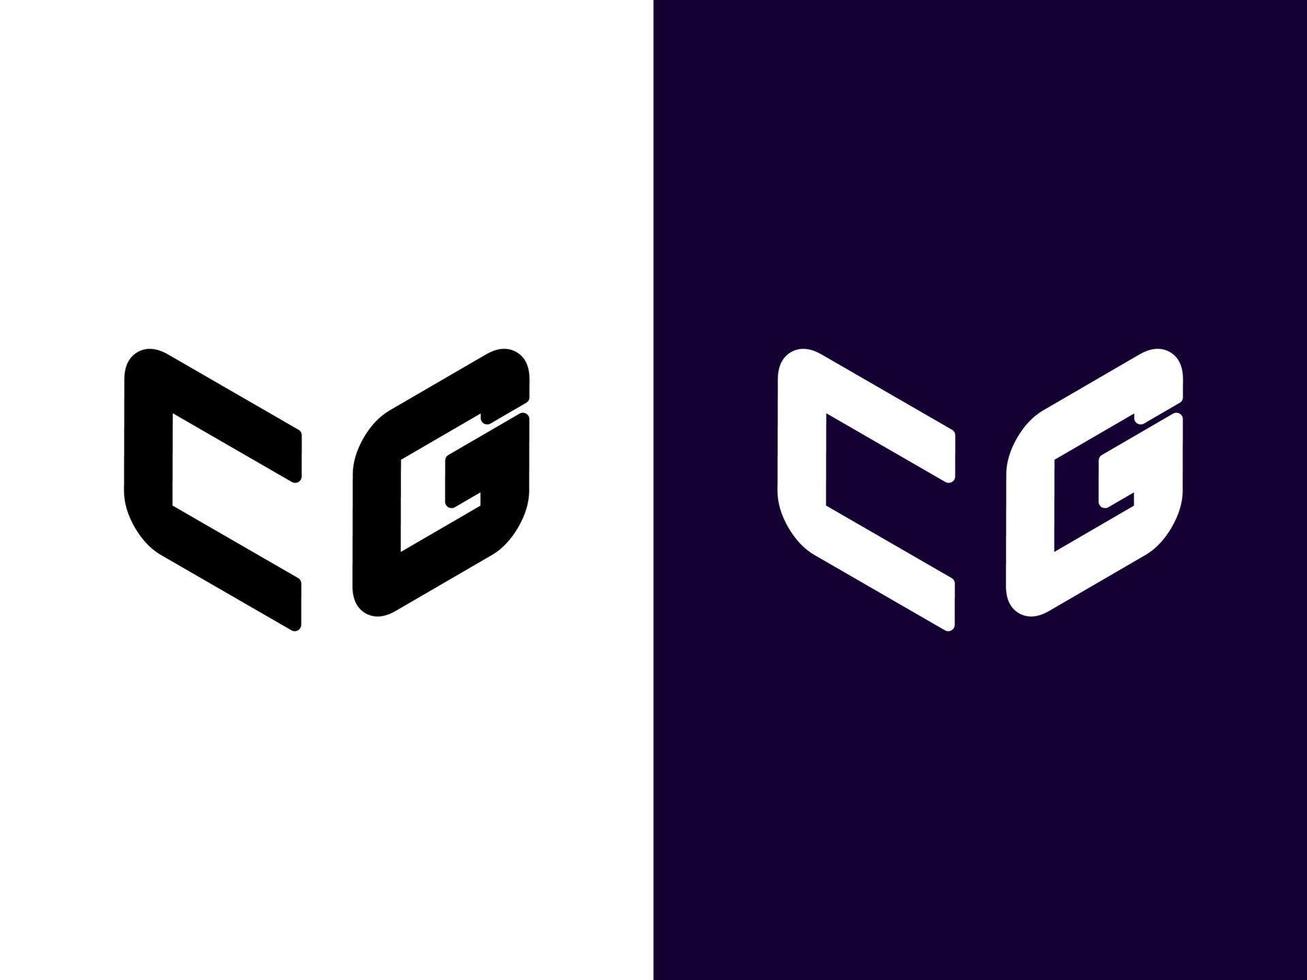 beginletter cg minimalistisch en modern 3D-logo-ontwerp vector